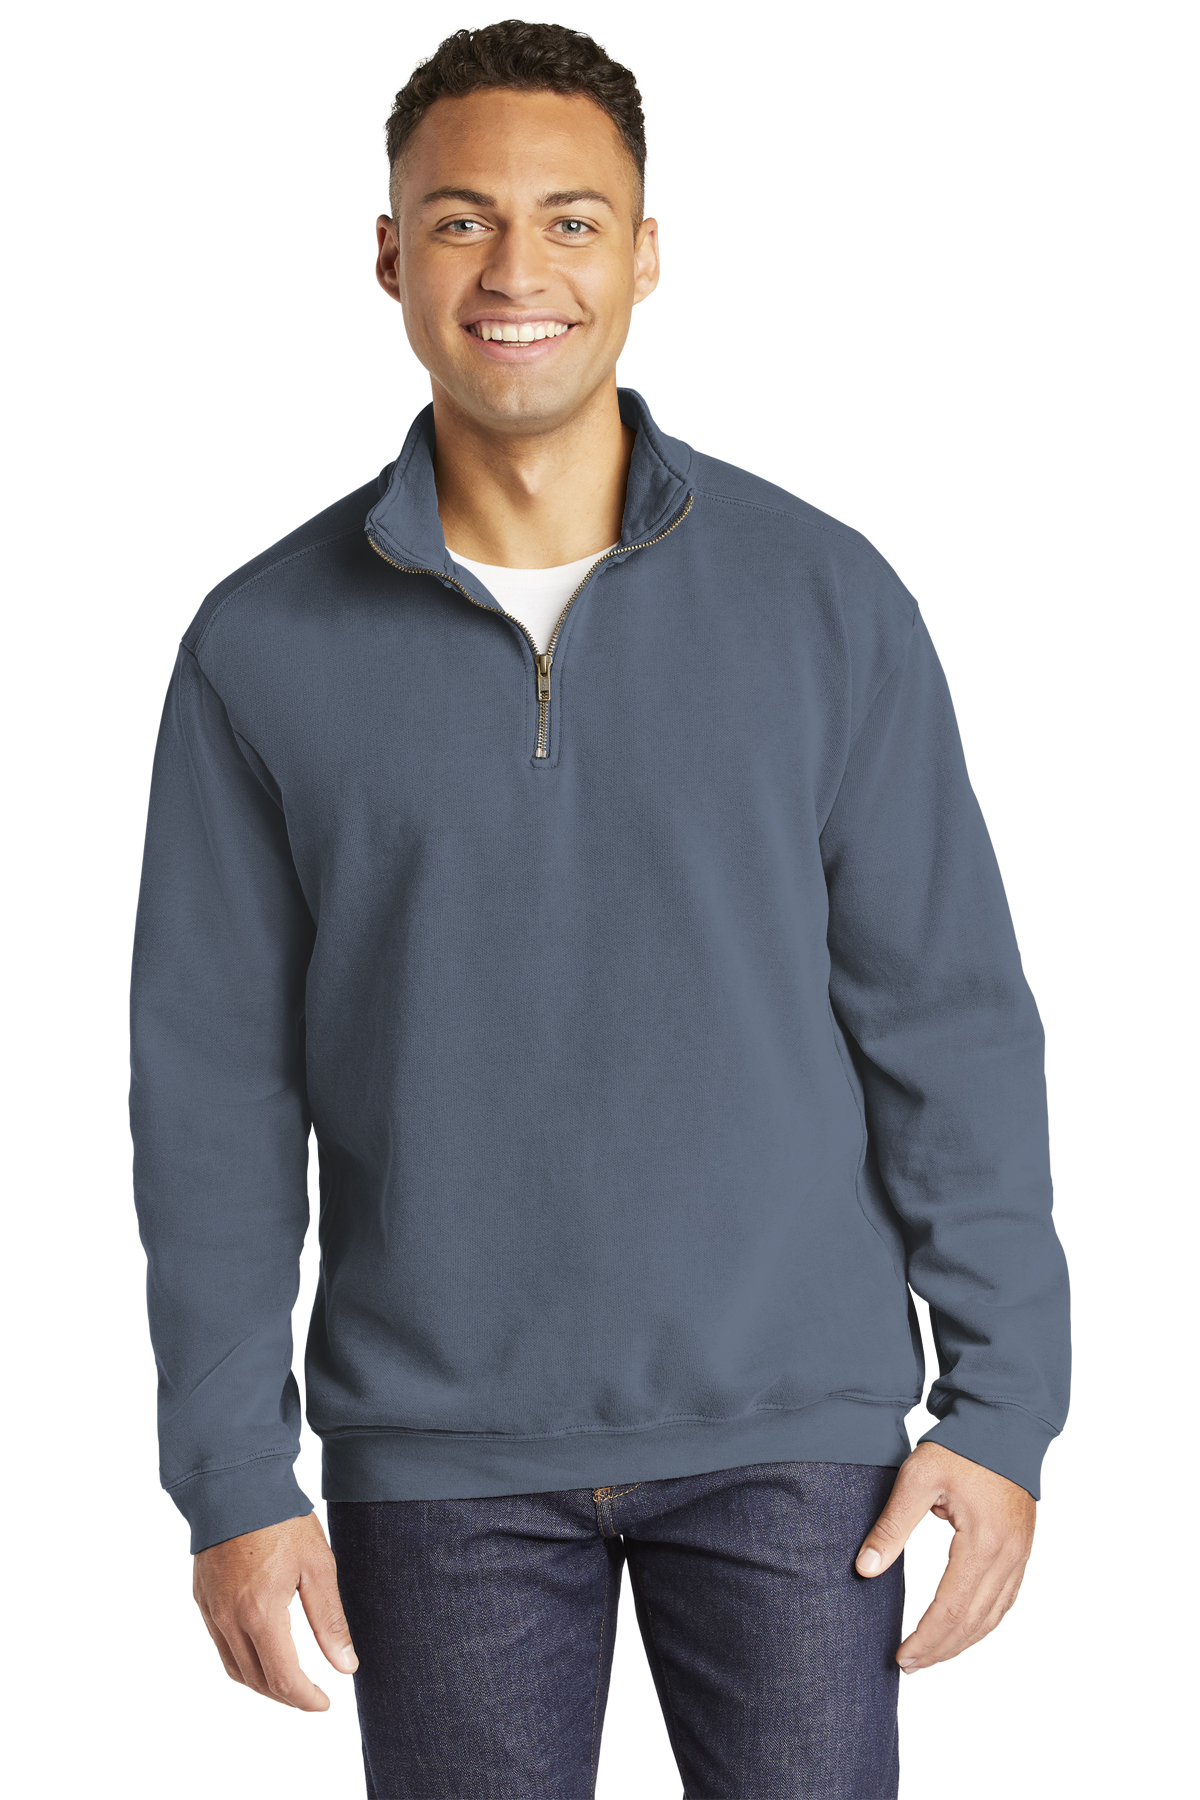 Spun 1/4-Zip Comfort Colors Ring Casuals | Product Company | Sweatshirt